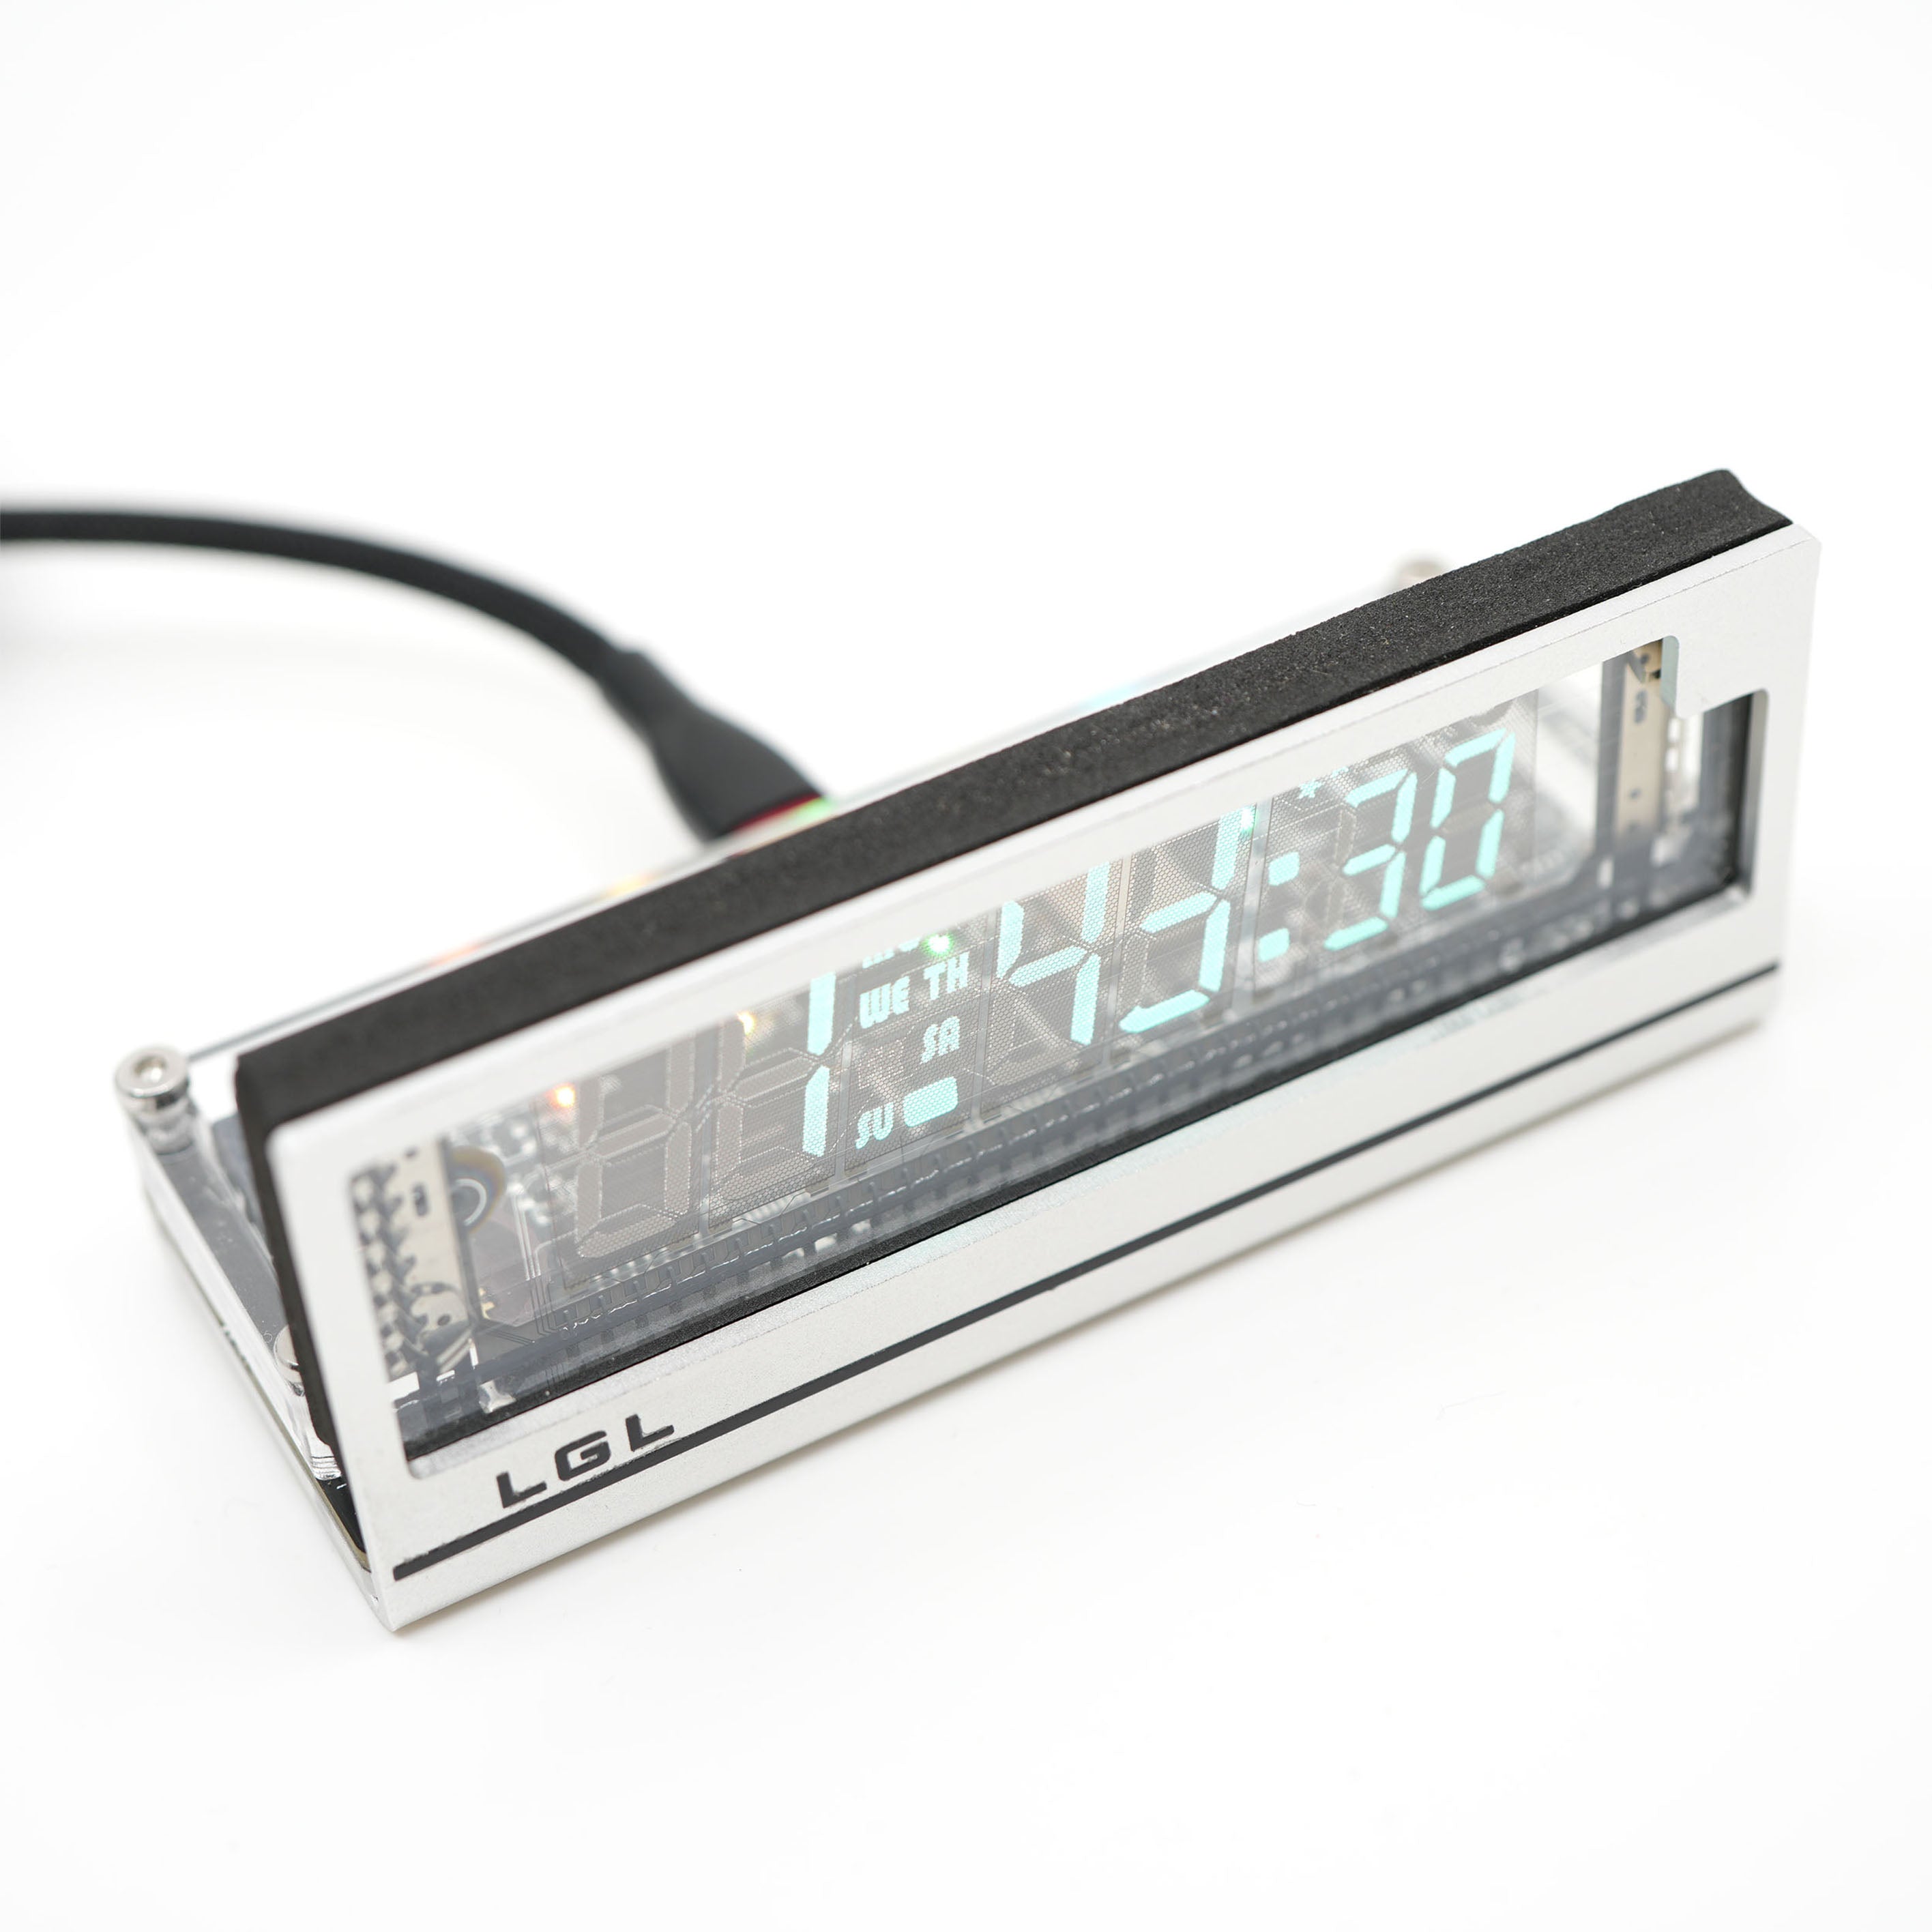 LGL VCK CCCP VFD 2024 Soviet Style Digital Clock